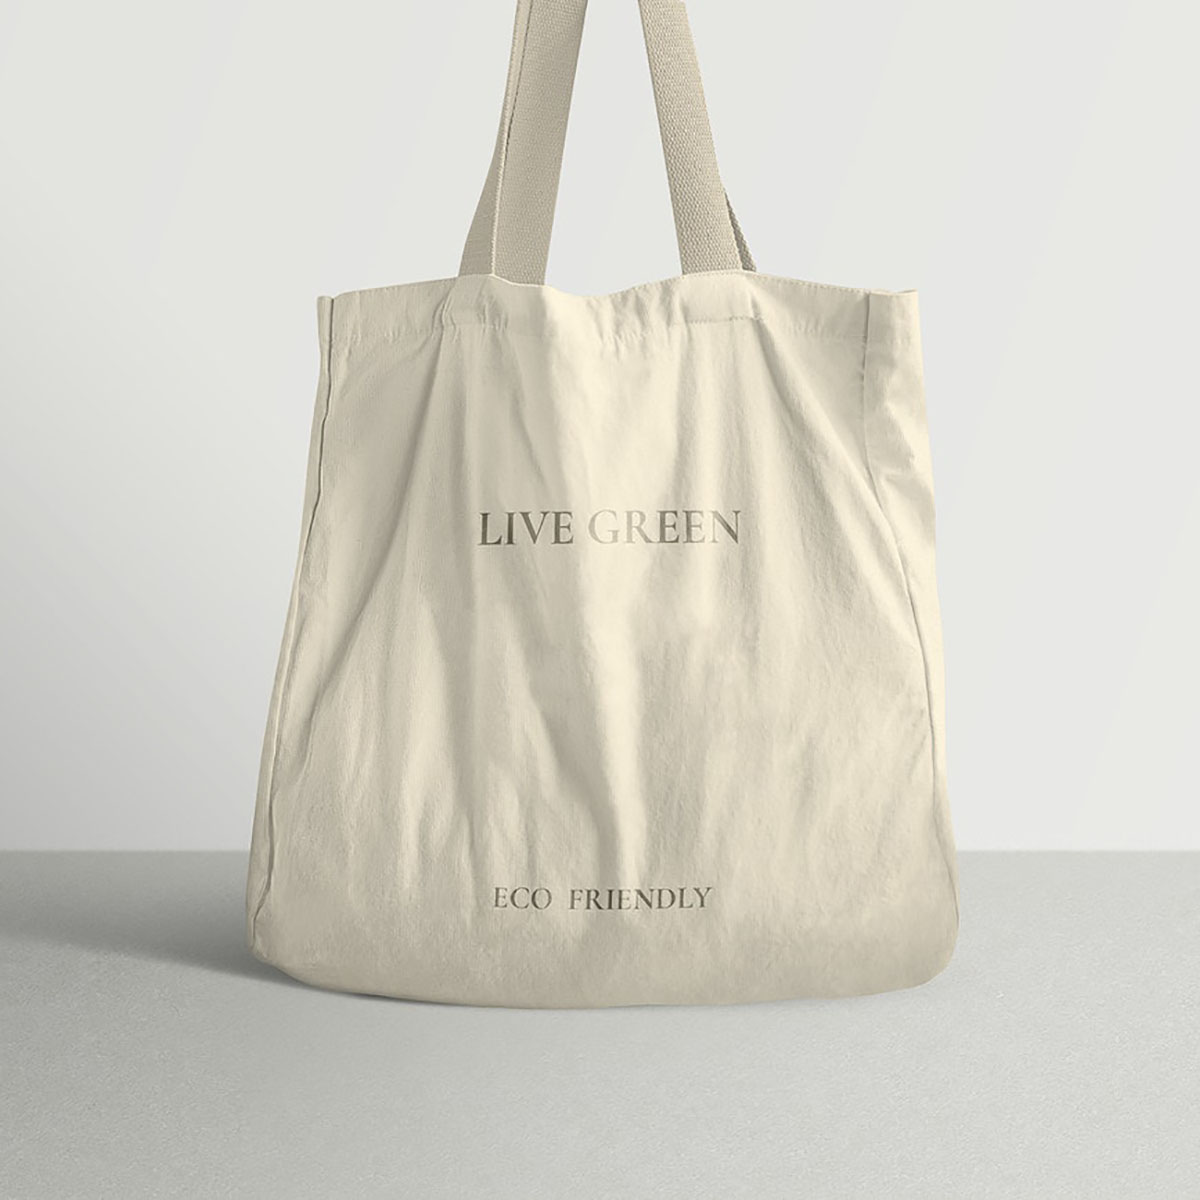 Printed cotton shopping tote bag